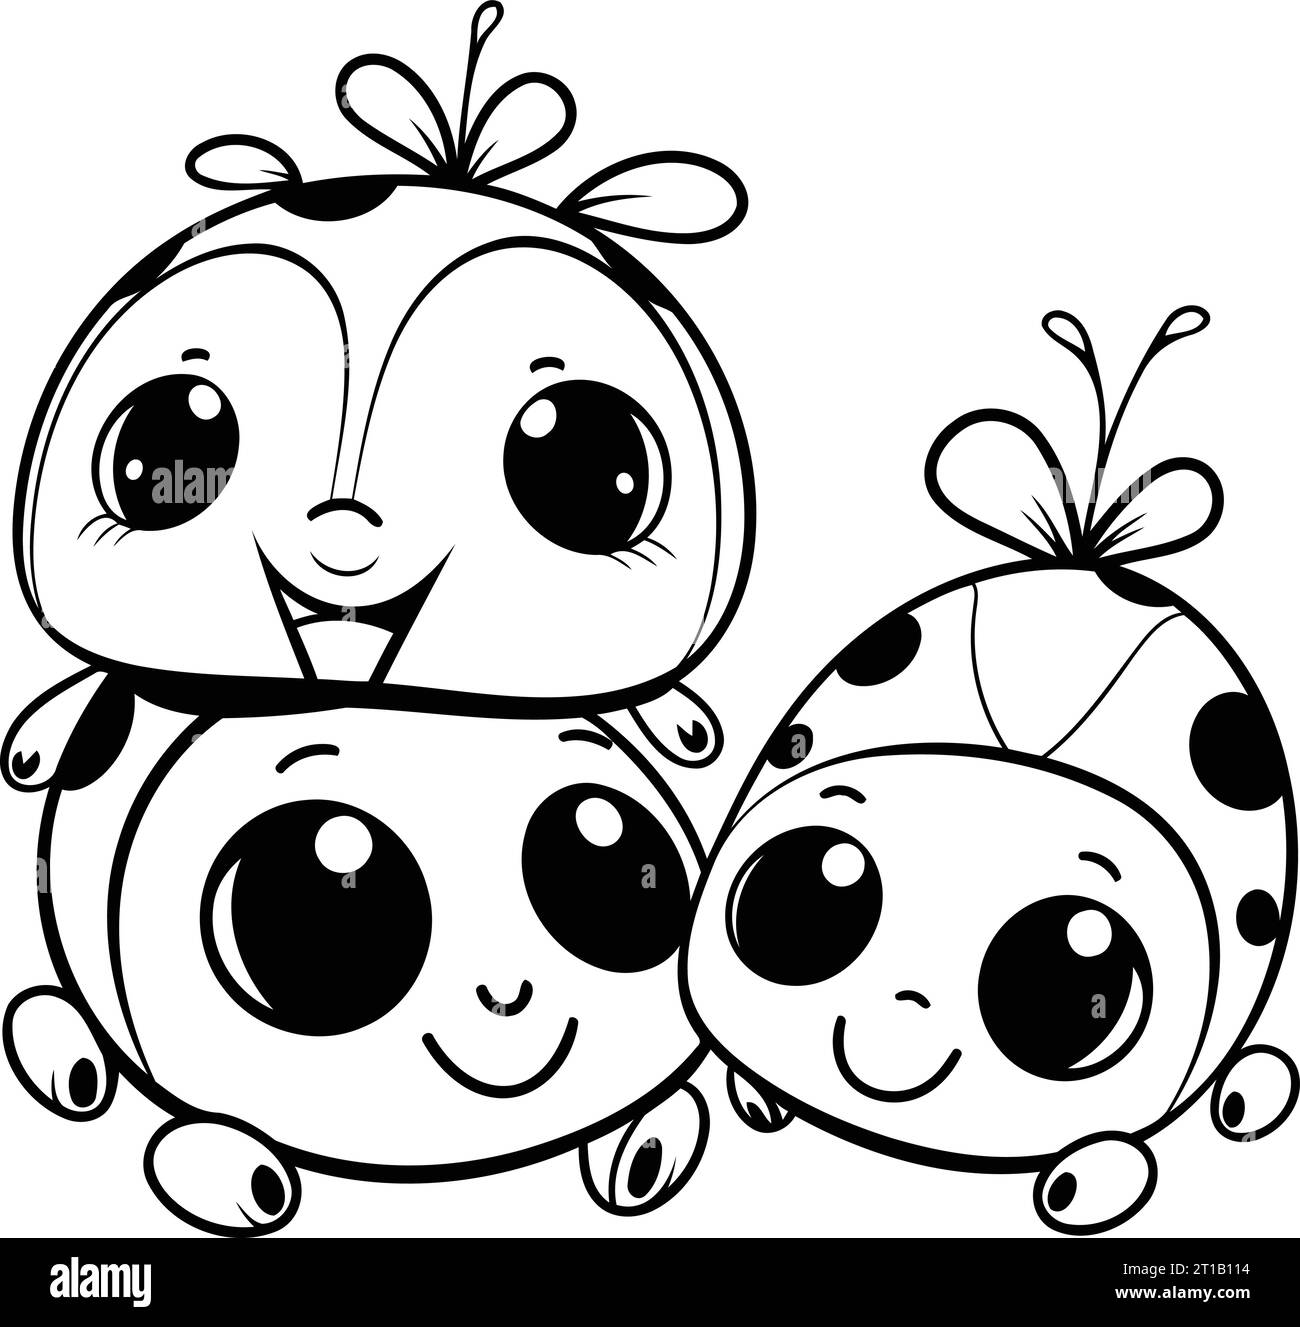 Cute cartoon ladybirds. Vector illustration isolated on white background. Stock Vector